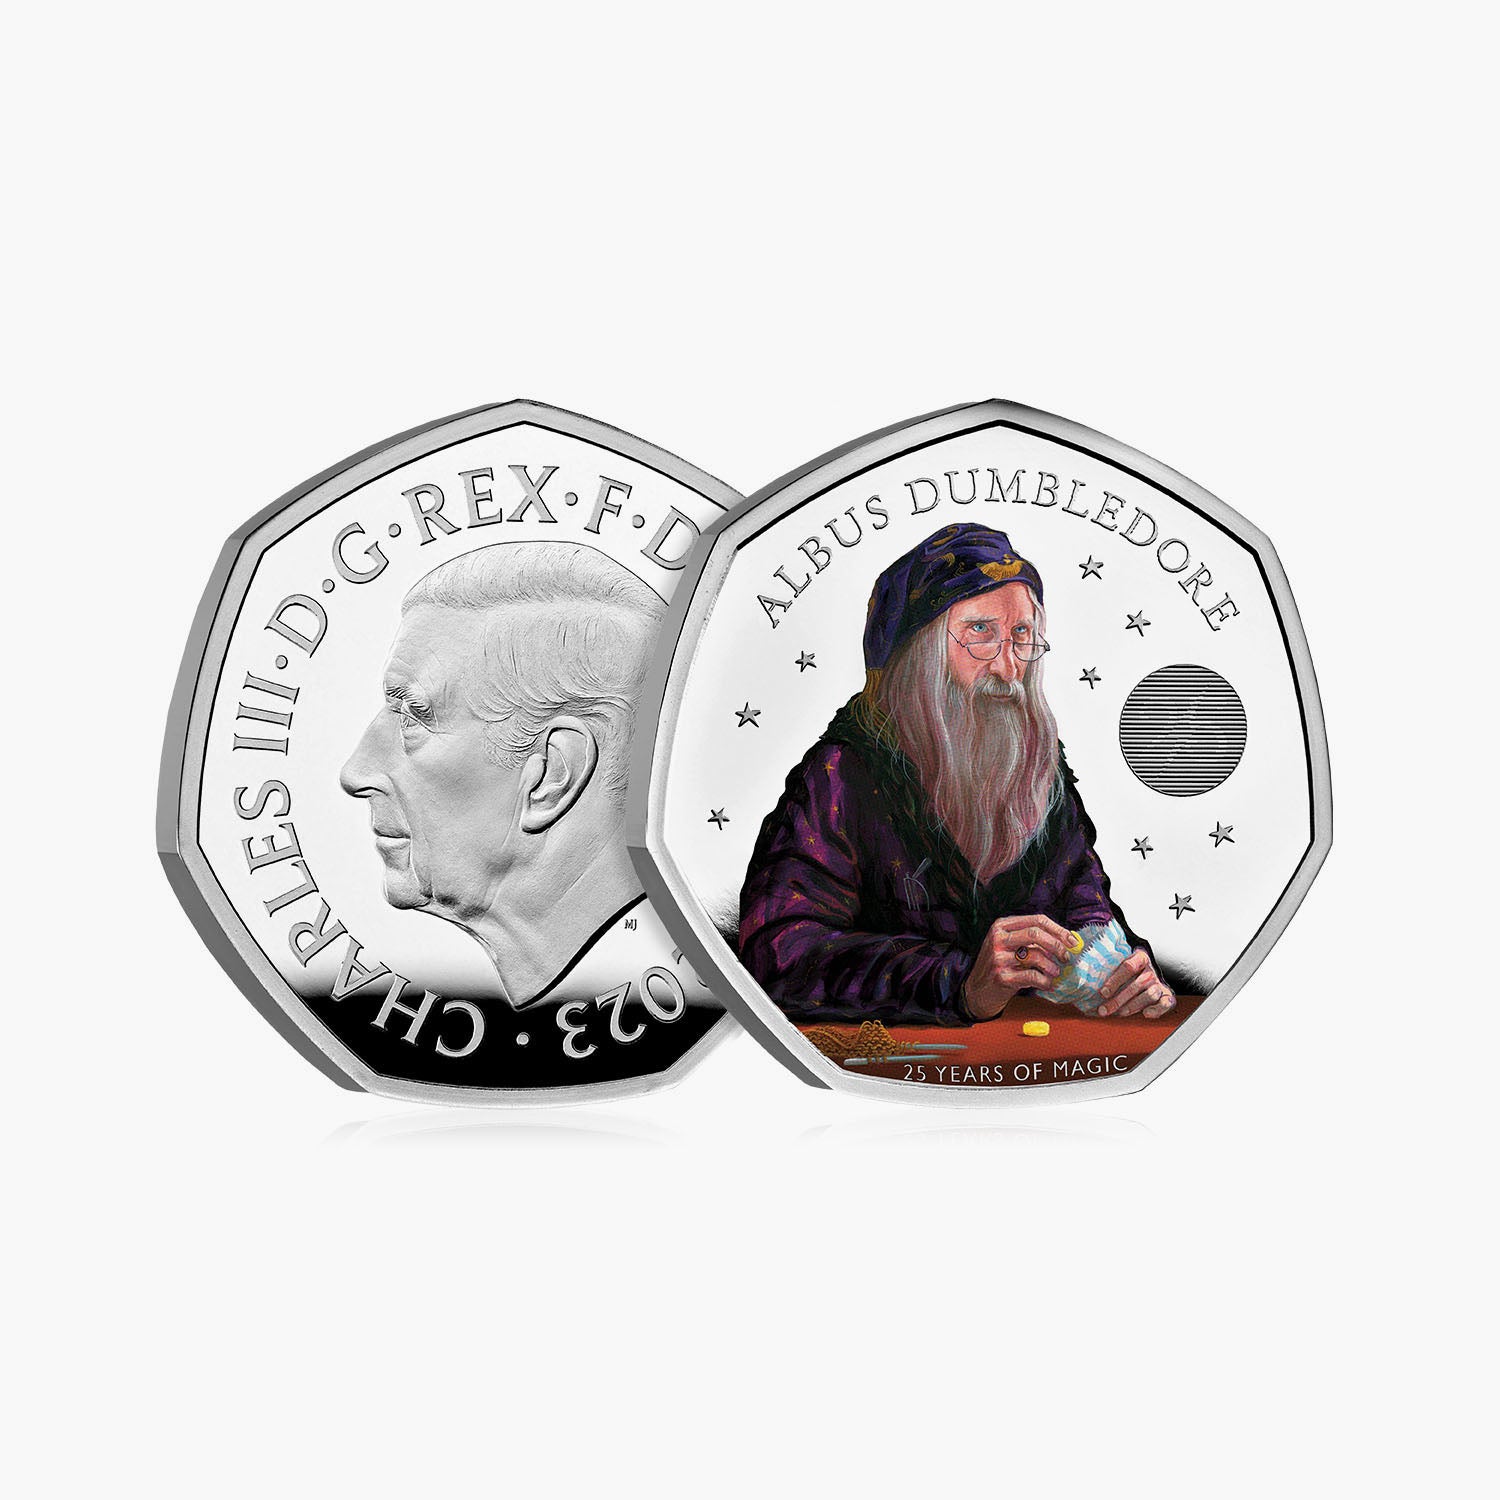 Harry Potter - Professor Dumbledore 2023 UK 50p Silver Proof Coin